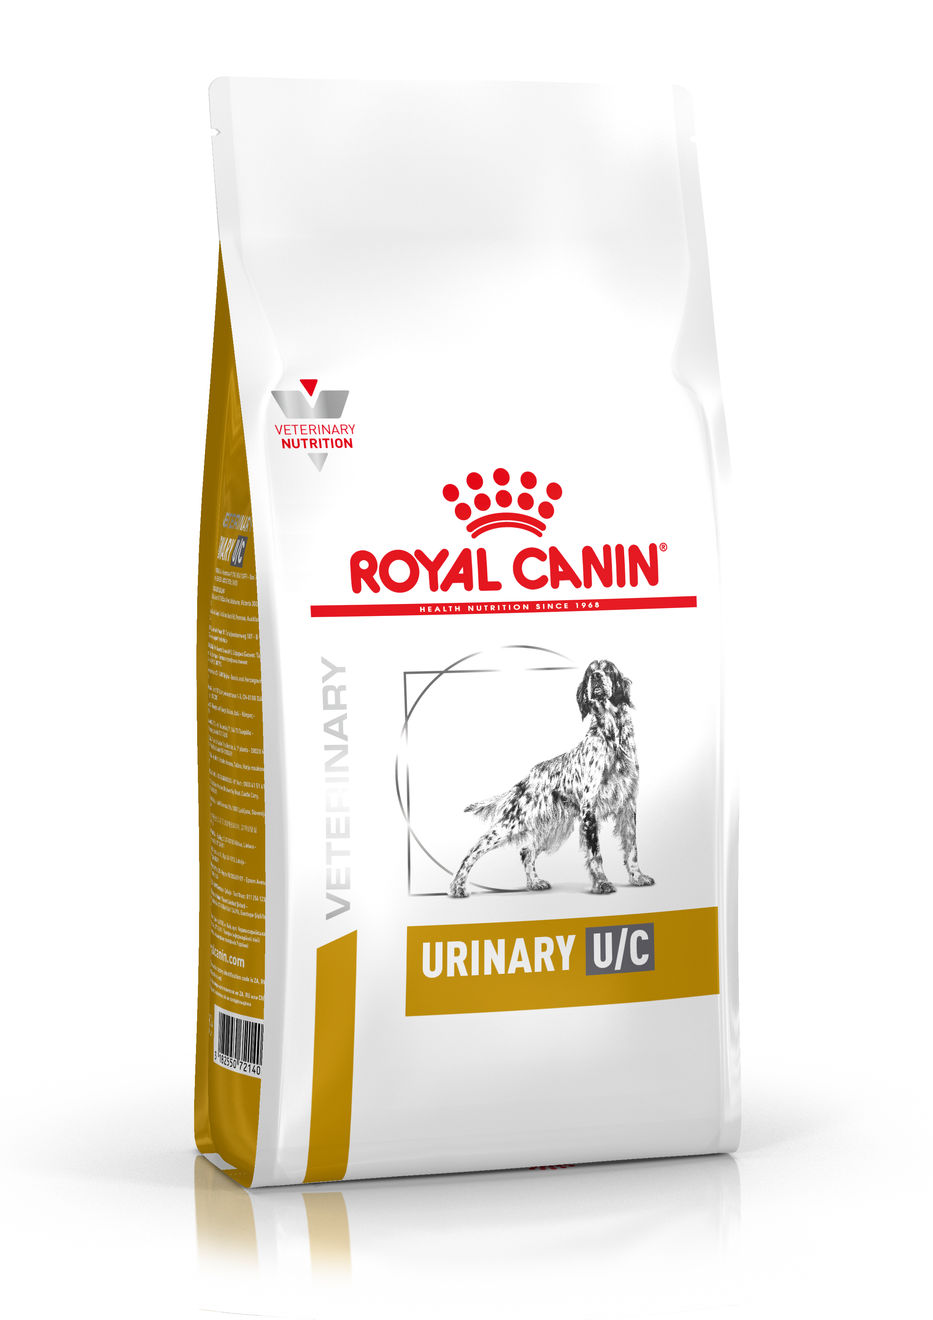 Royal Canin U/C low purine 2 x 14 kg